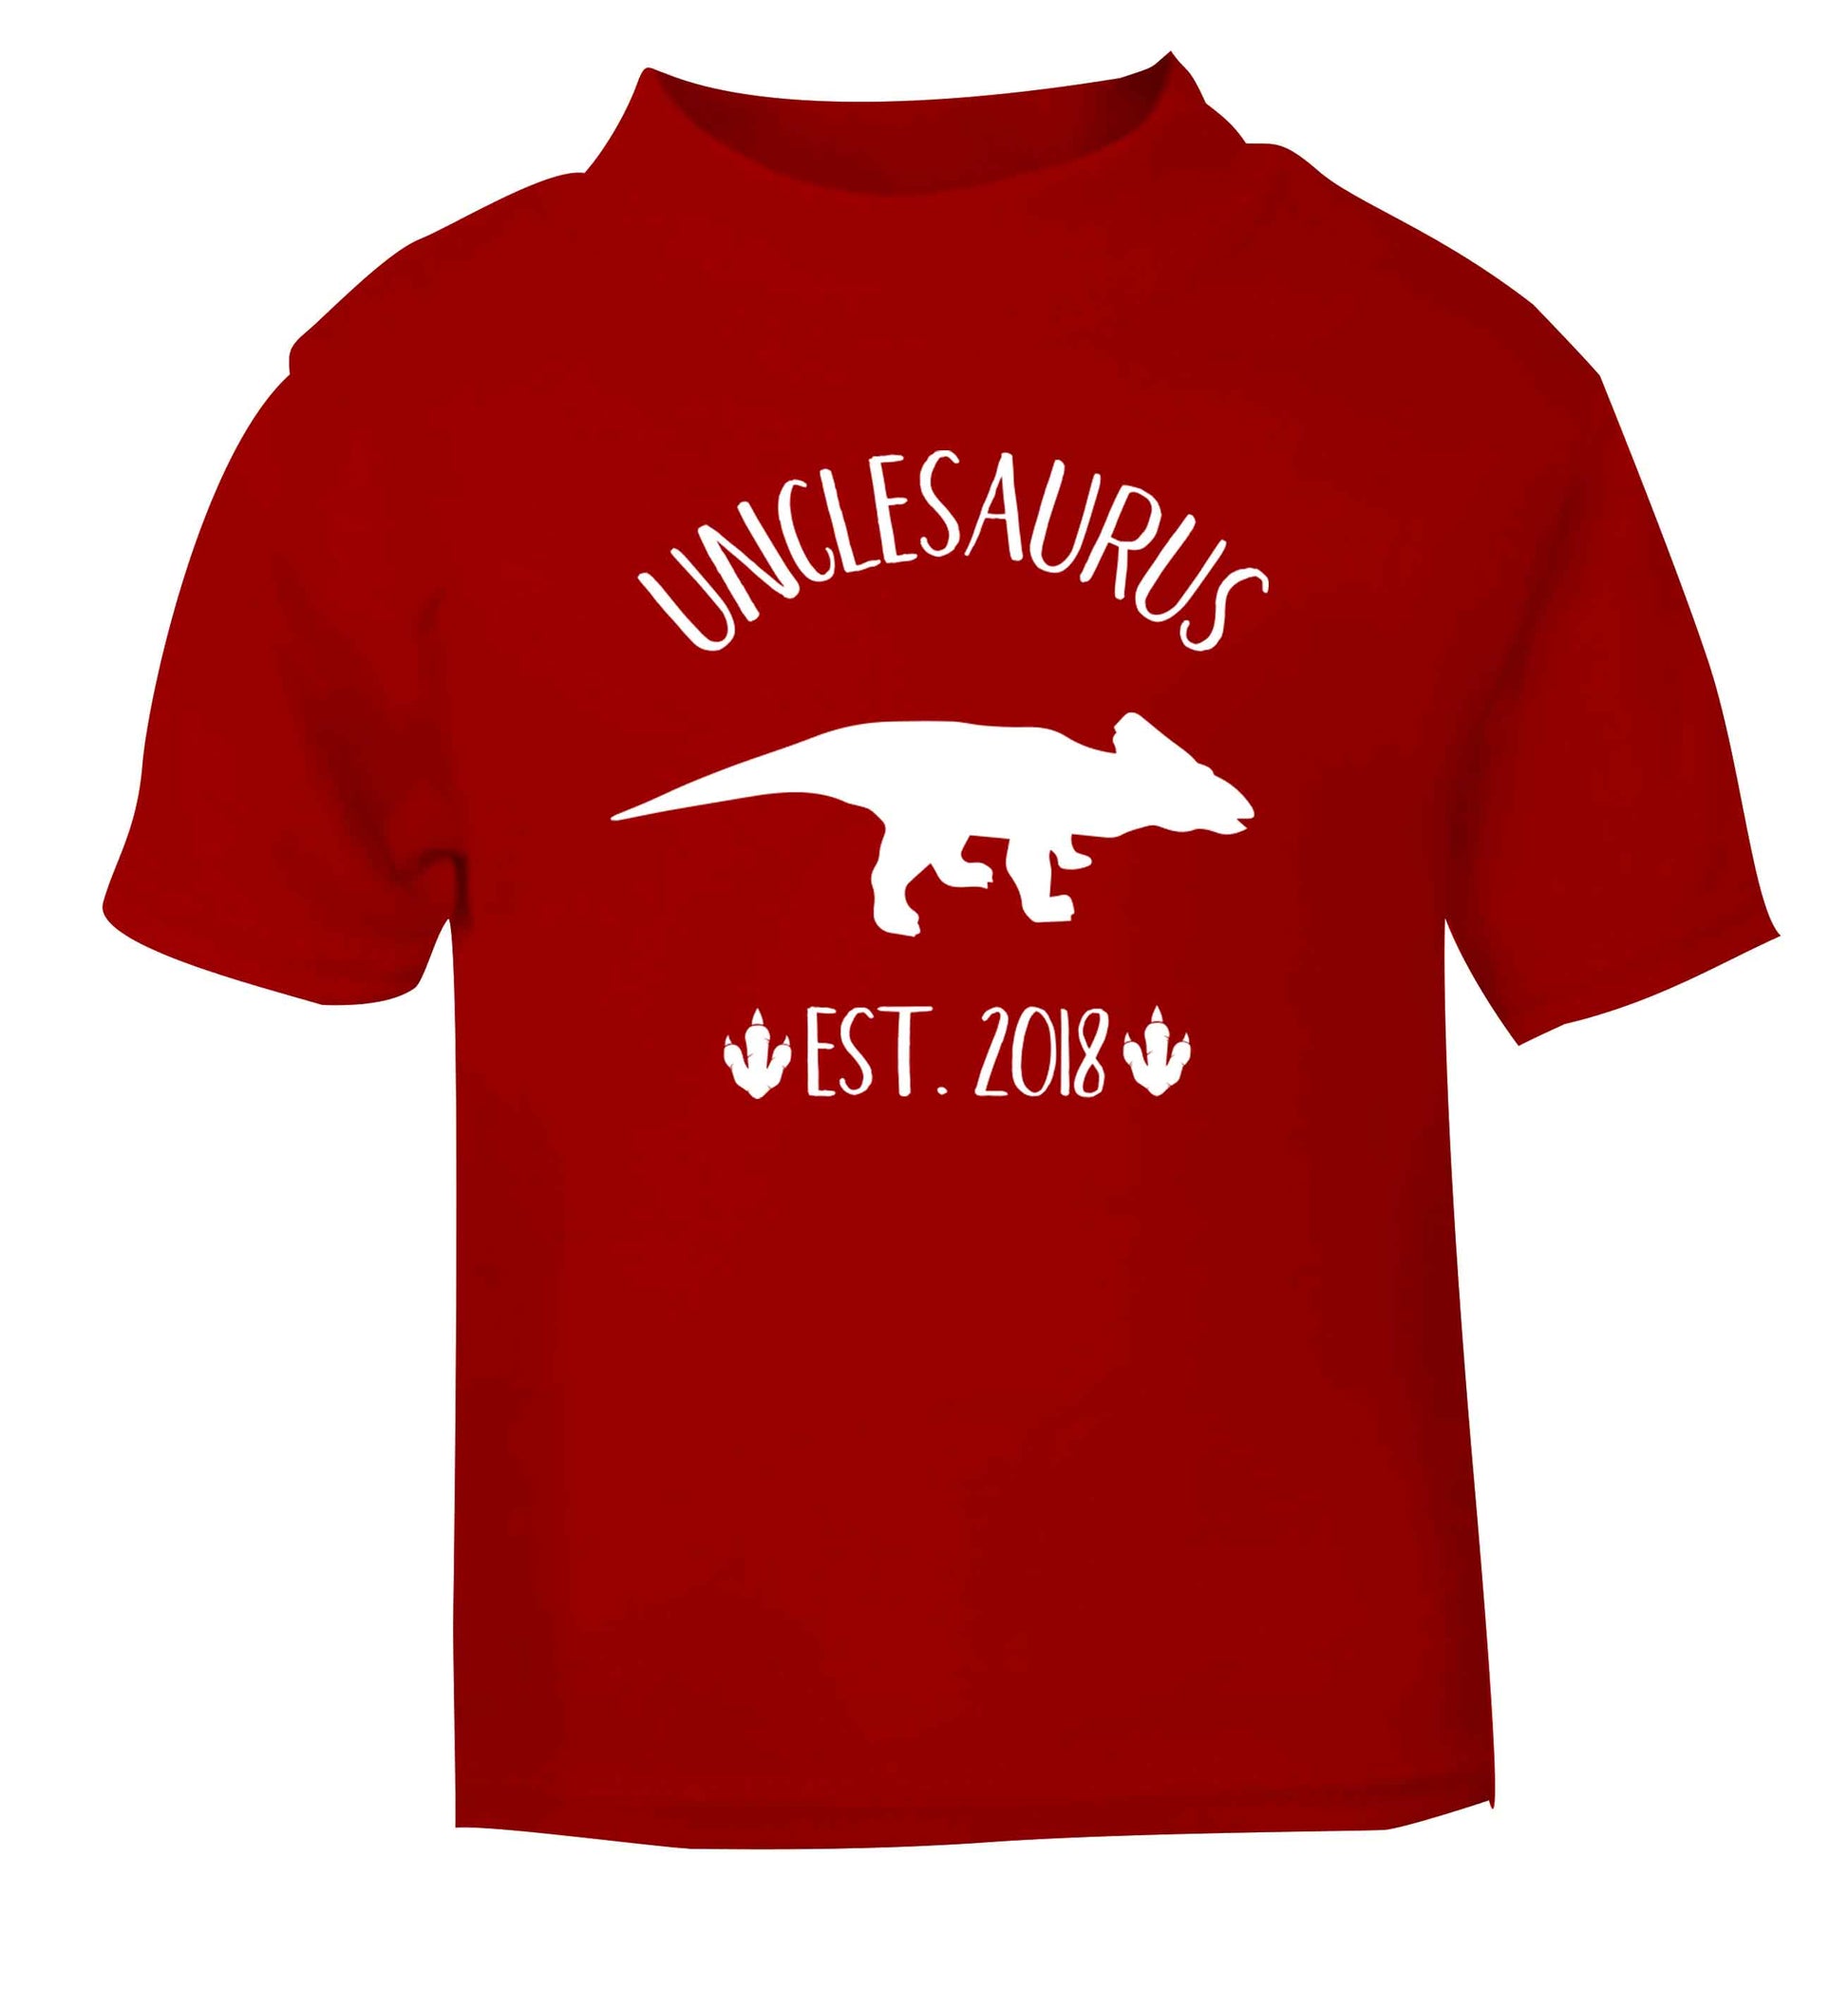 Personalised unclesaurus since (custom date) red Baby Toddler Tshirt 2 Years